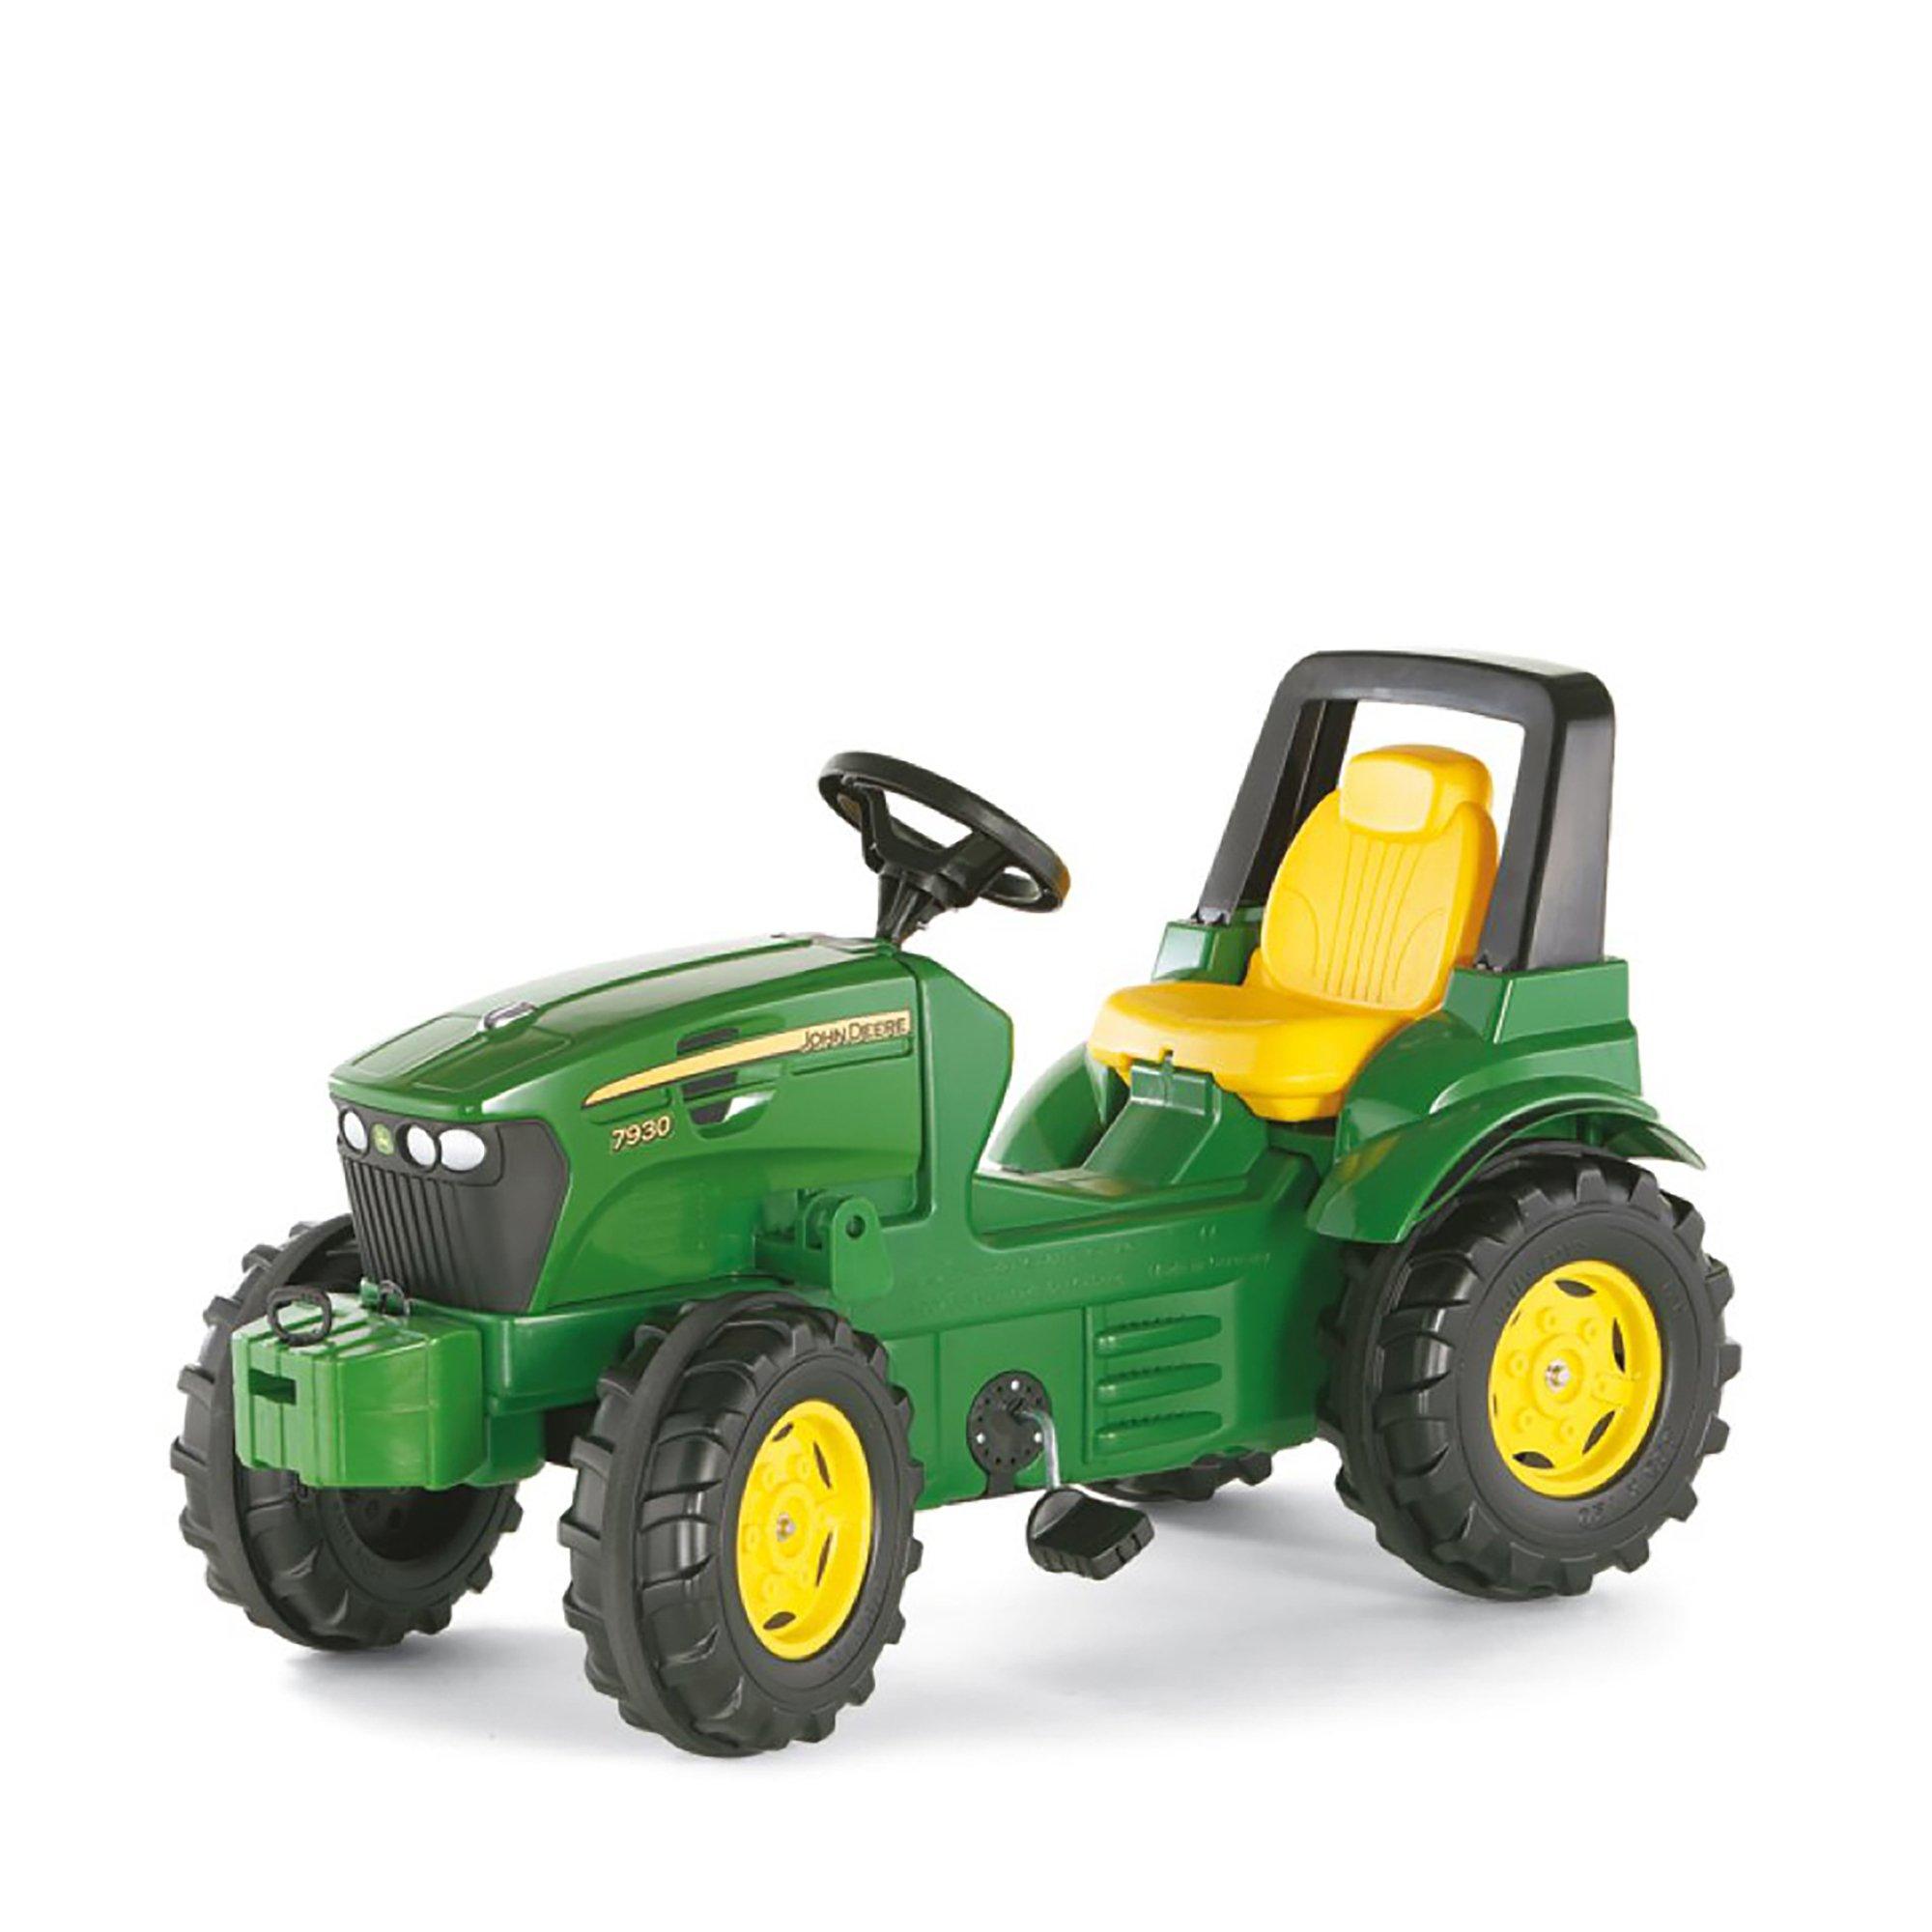 Image of rolly toys Farmtrac John Deere 7930